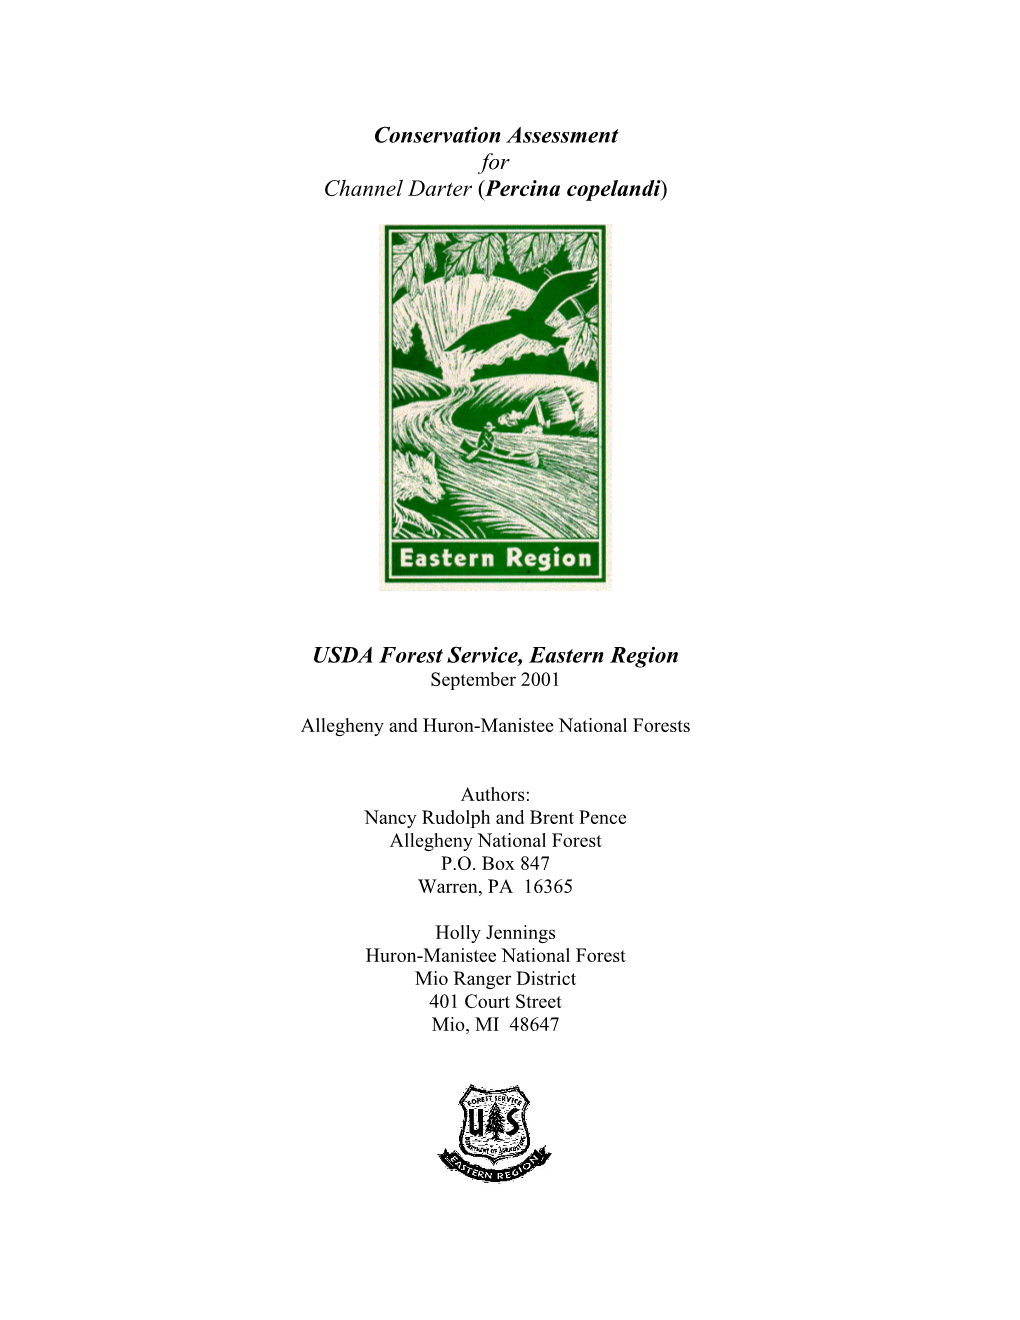 Conservation Assessment for Channel Darter (Percina Copelandi) USDA